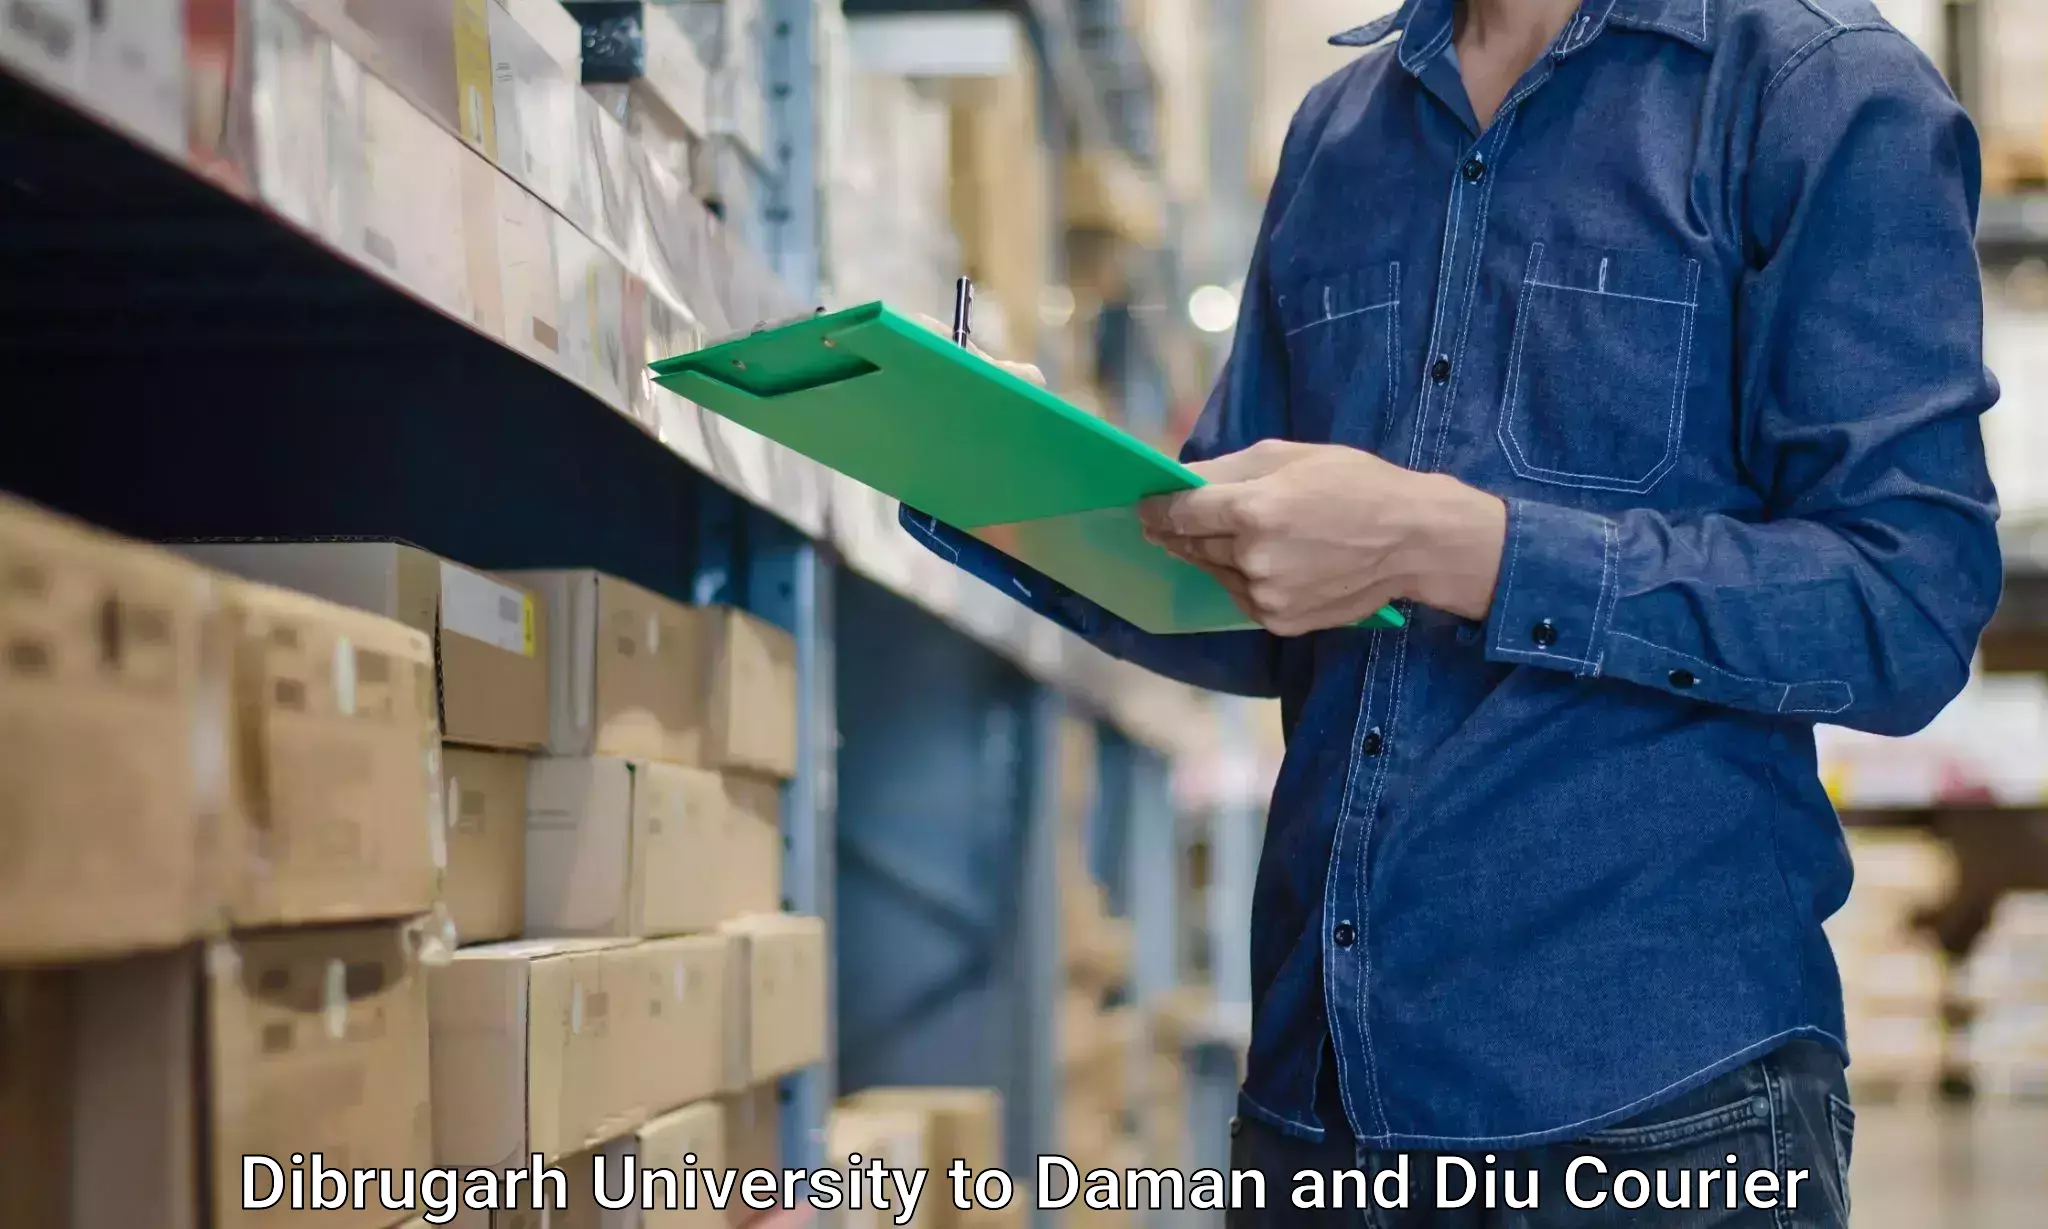 Quality moving company Dibrugarh University to Diu